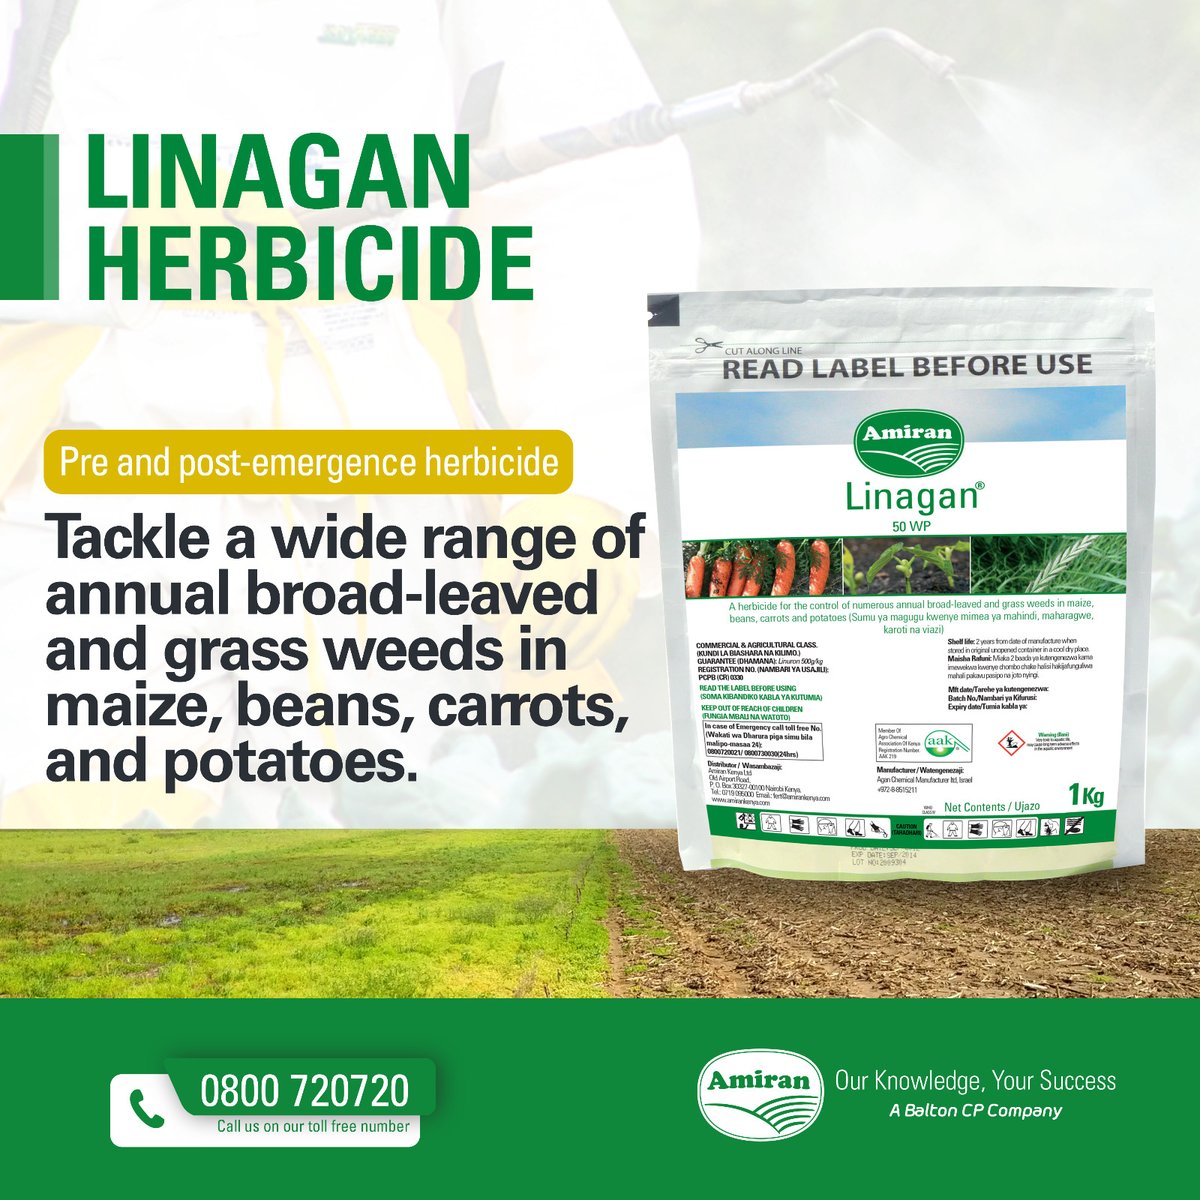 Linagan ni dawa dhabiti ya kuangamiza magugu kwenye mimea ya mahindi, maharagwe, karoti na viazi. LINAGAN is a pre and post-emergence control herbicide. Perfect for tackling a wide range of annual broad-leaved & grass weeds in maize, beans, carrots, and potatoes. 📞 0800720720.